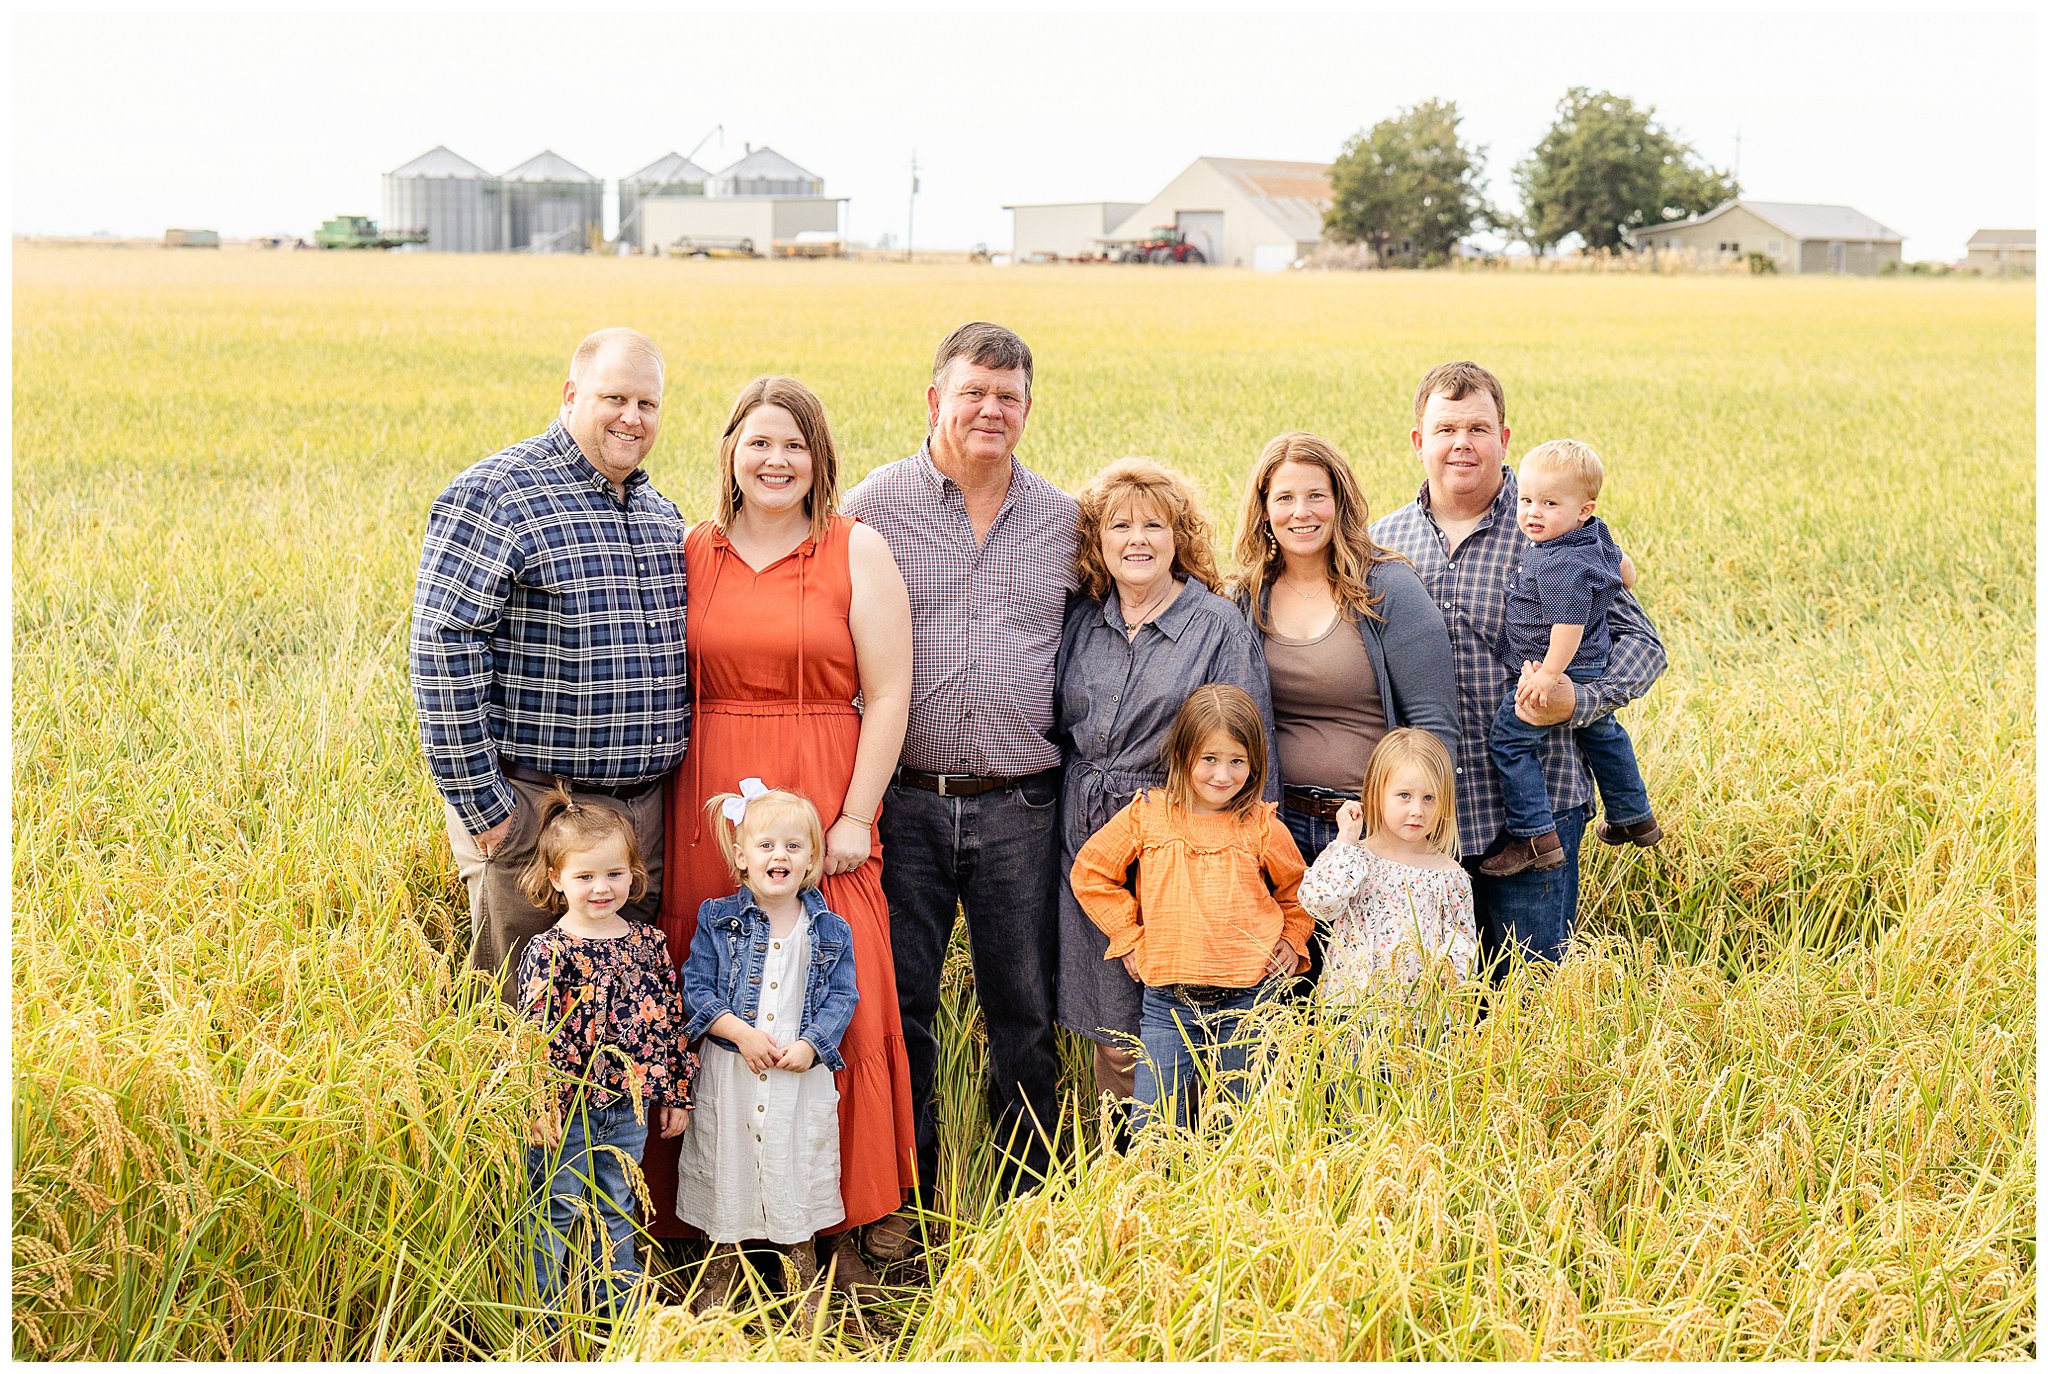 Extended Family Session in Rice Field | Lisa + Dan